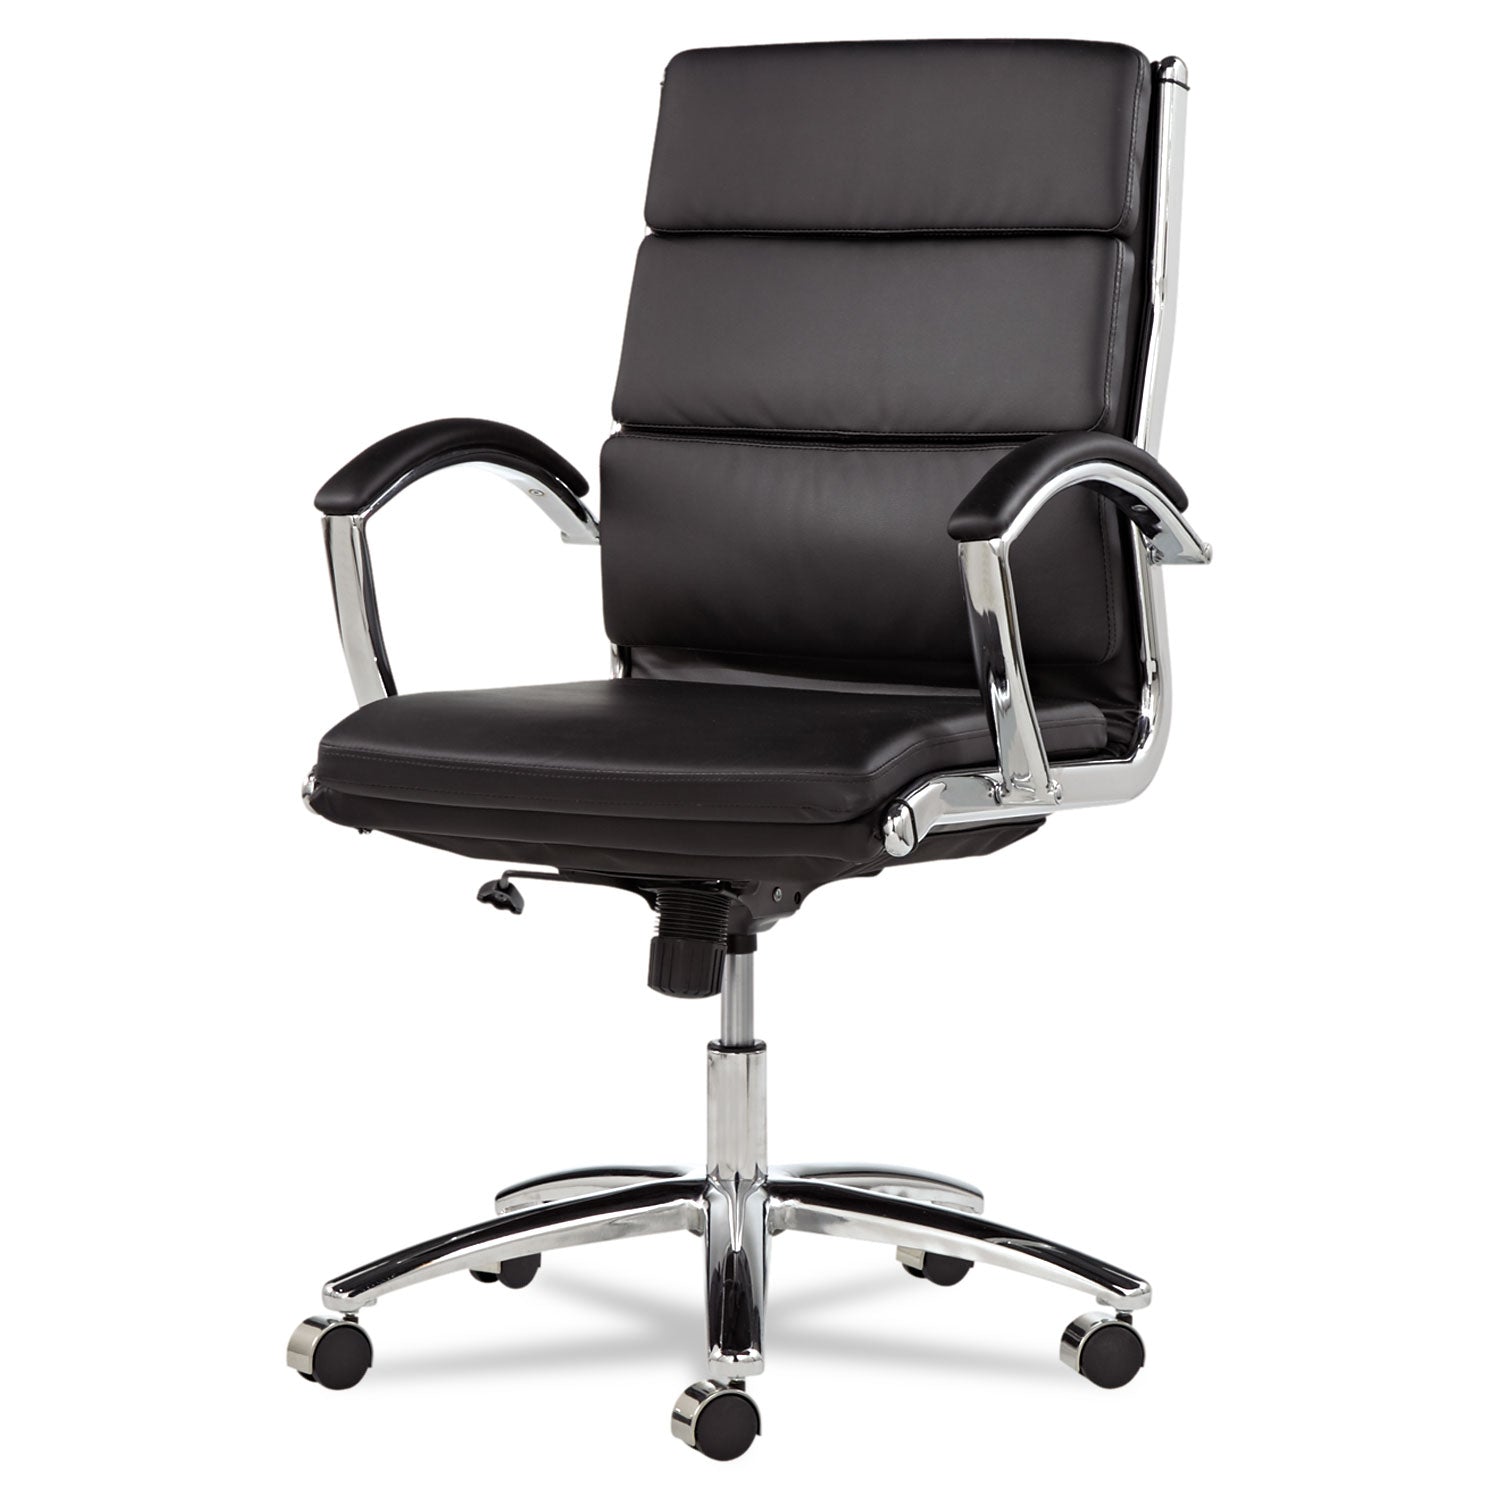 Alera Neratoli Mid-Back Slim Profile Chair, Faux Leather, Supports Up to 275 lb, Black Seat/Back, Chrome Base - 